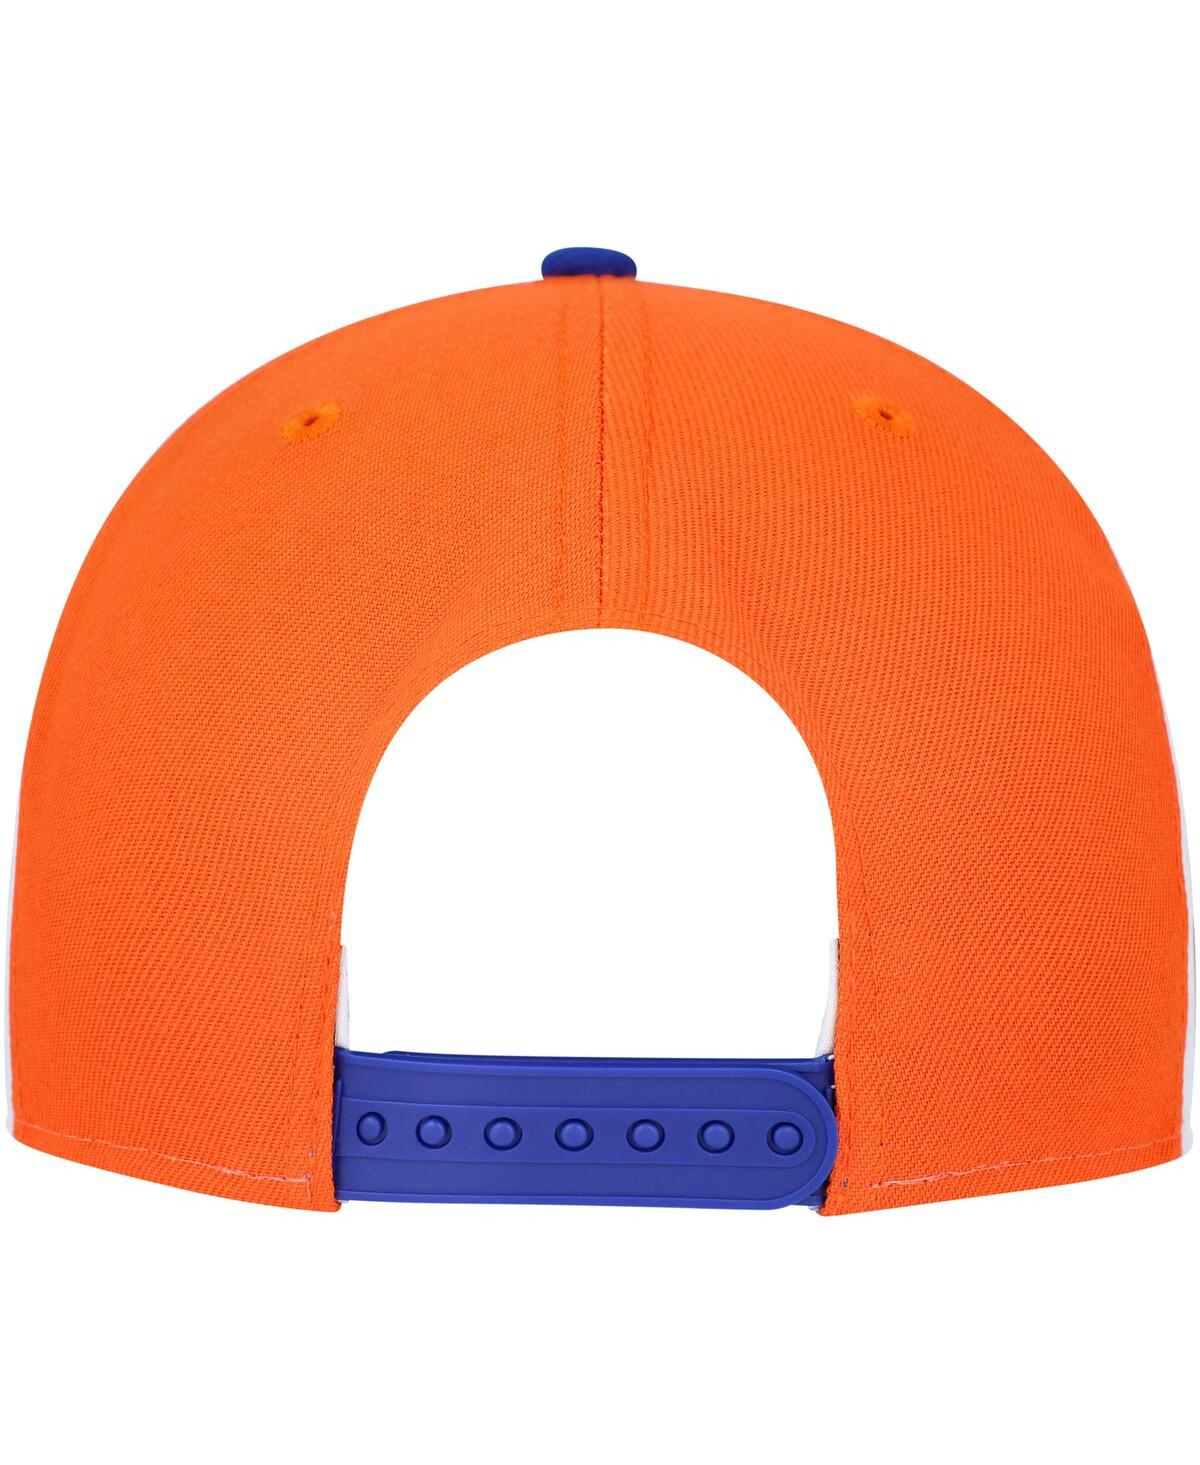 Shop New Era Men's  Blue New York Knicks Pop Panels 9fifty Snapback Hat